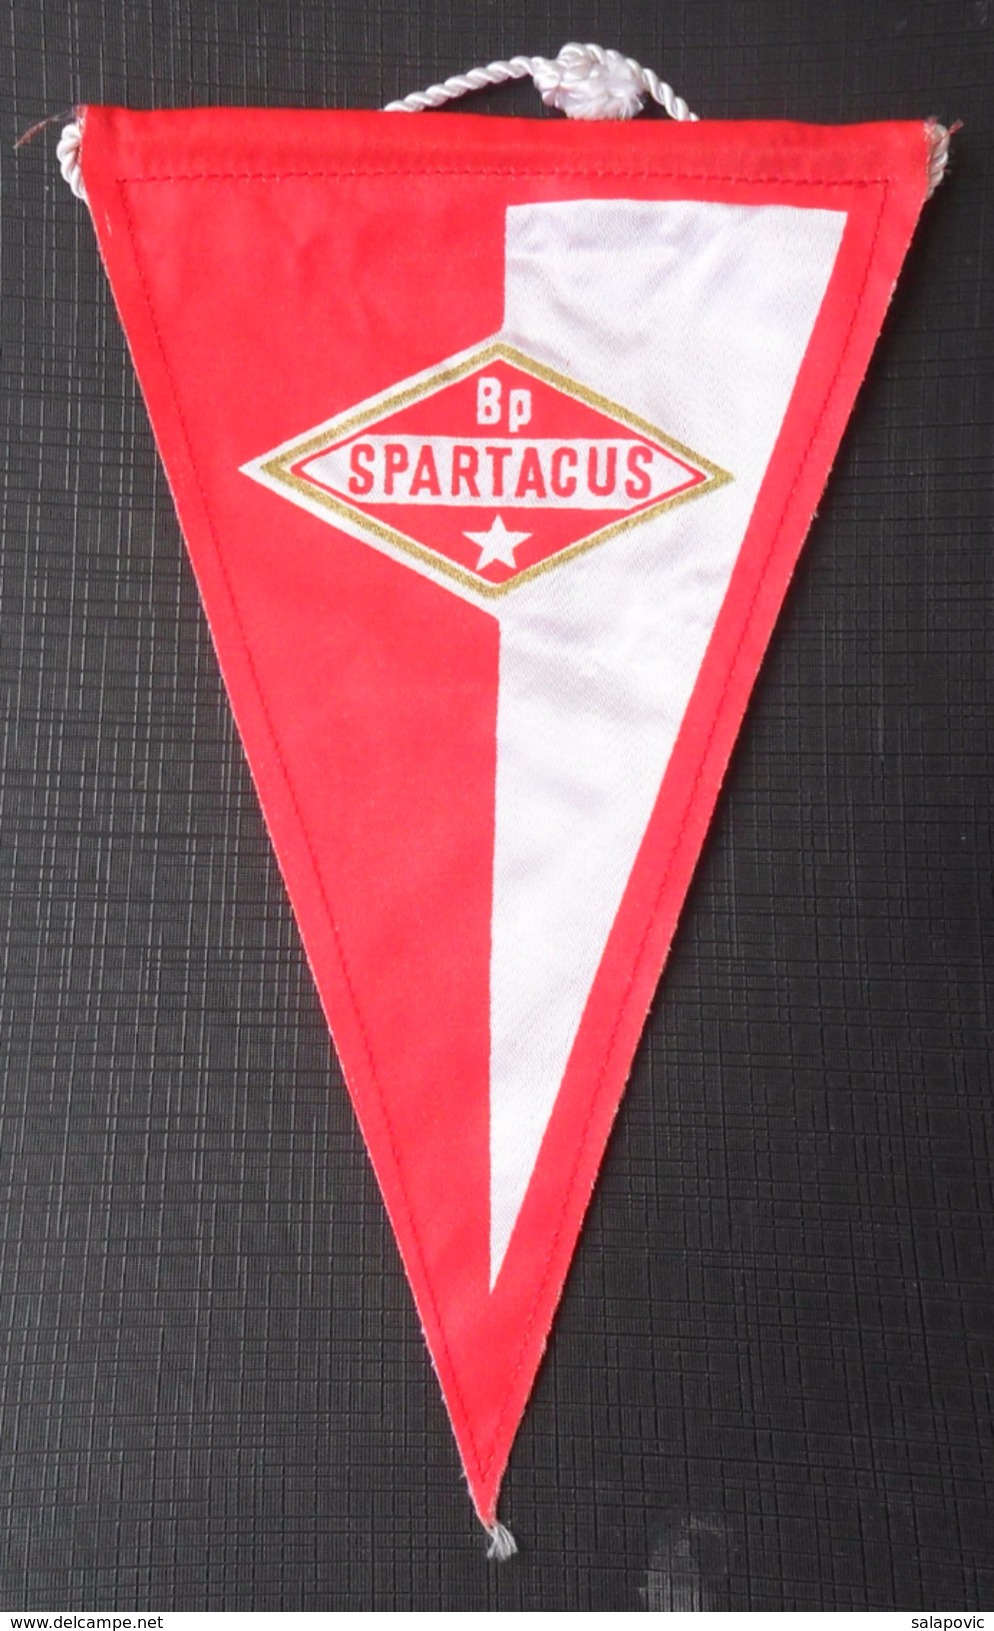 Budapesti Spartacus HUNGARY FOOTBALL CLUB, SOCCER / FUTBOL / CALCIO OLD PENNANT, SPORTS FLAG - Uniformes Recordatorios & Misc